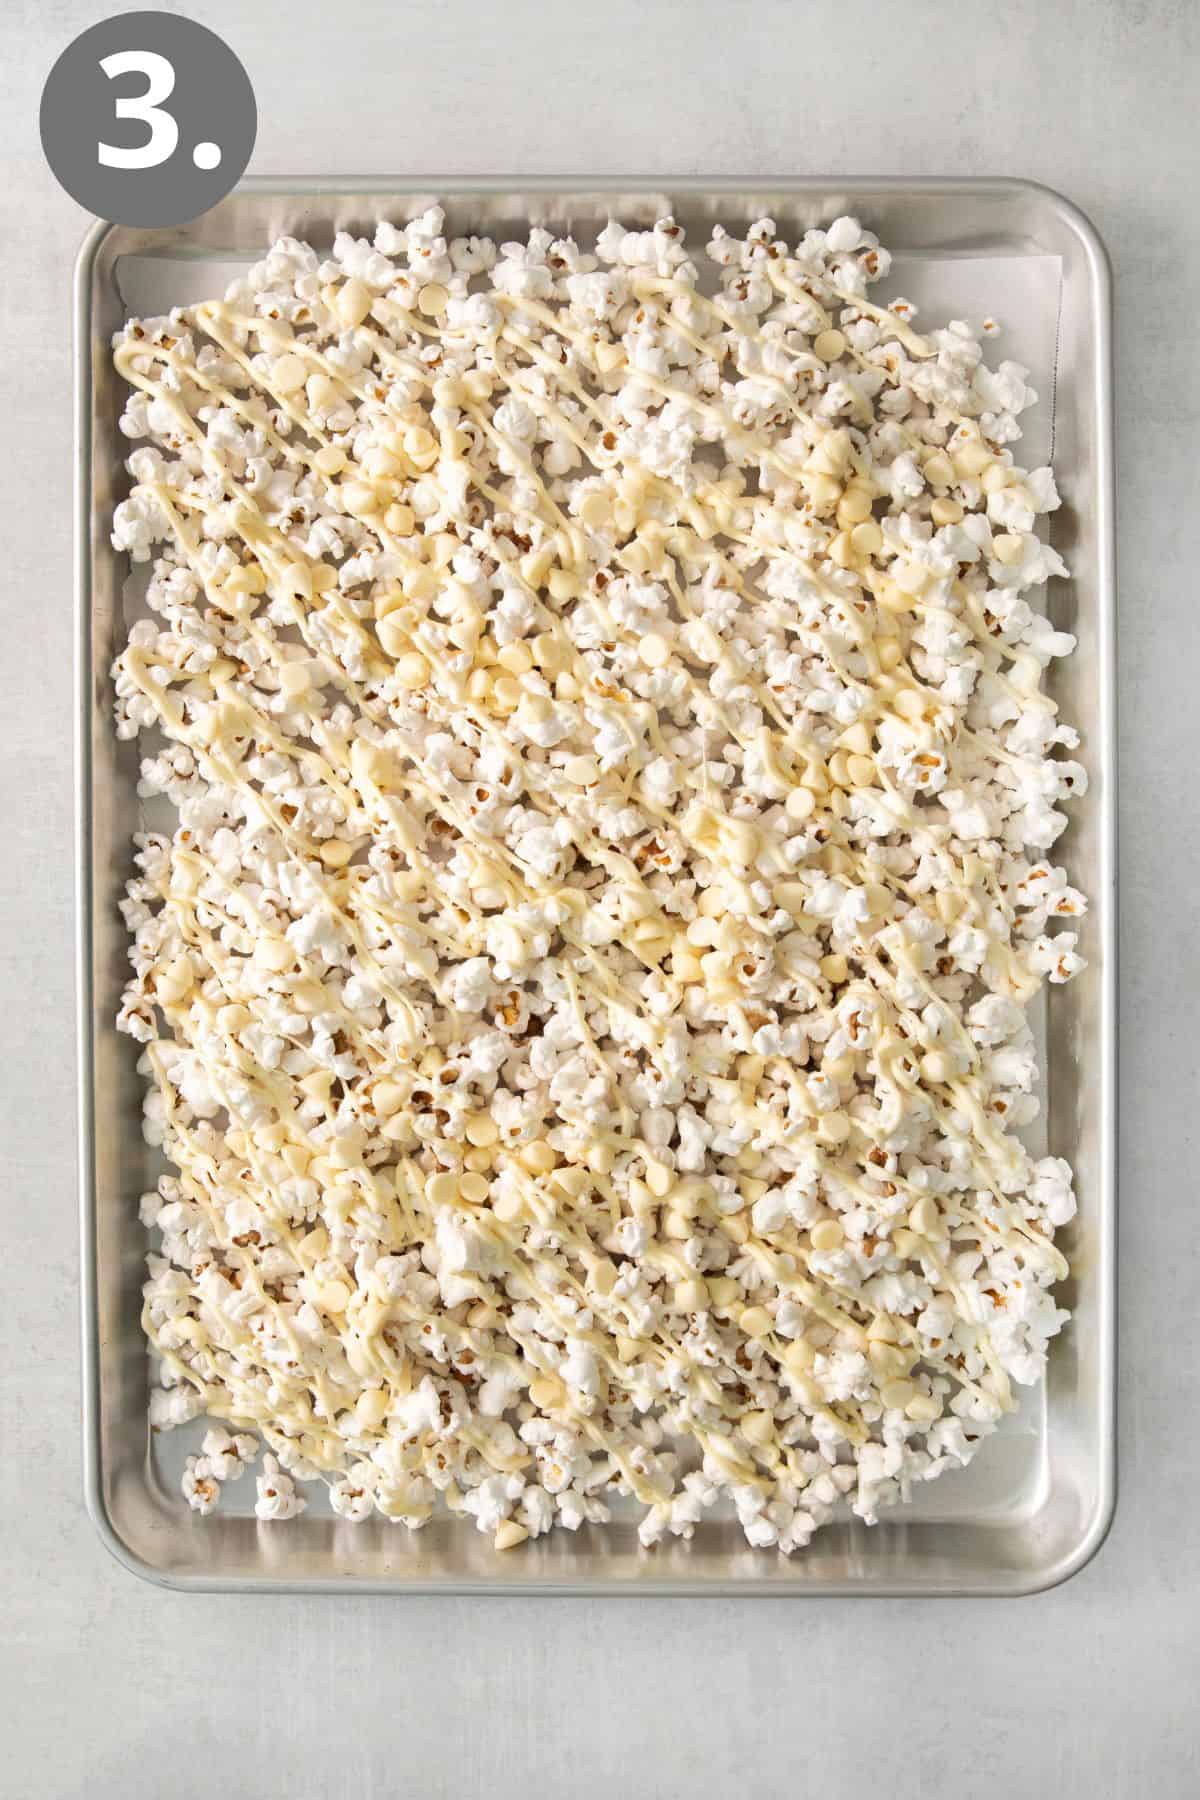 White chocolate popcorn on a baking tray